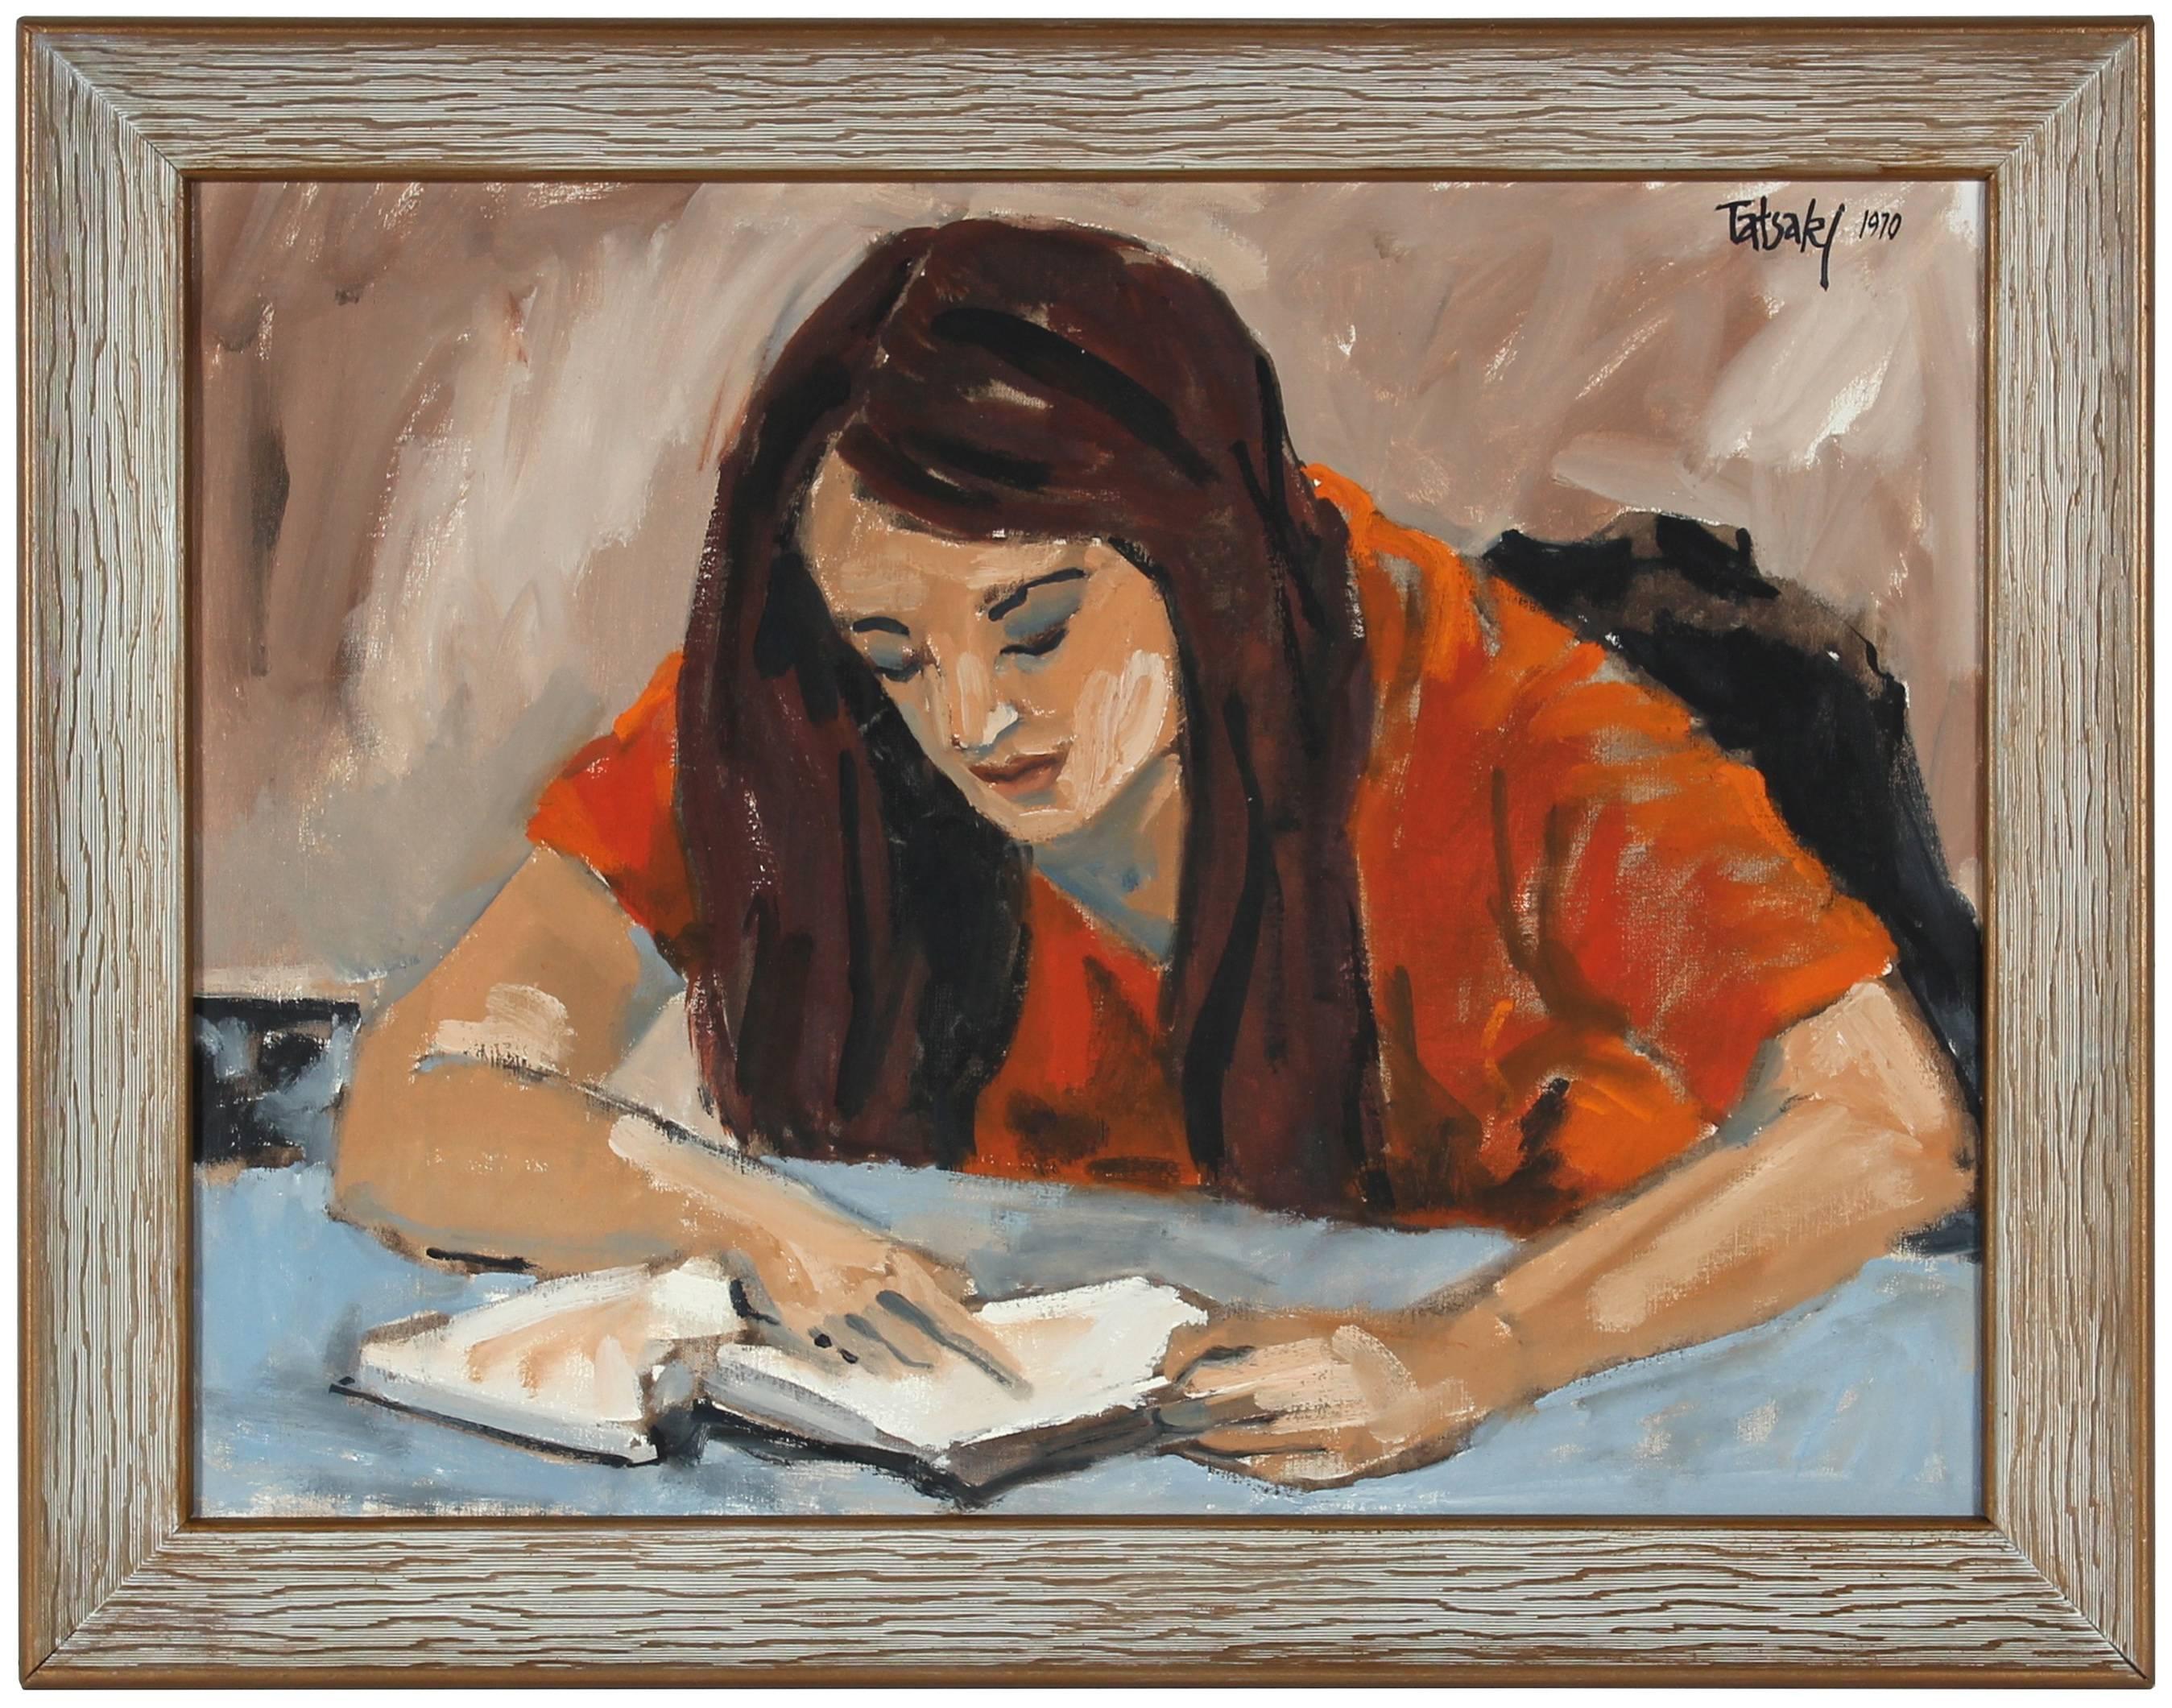 Rip Matteson Portrait Painting - 1970s "Concord, Carla" Portrait of a Woman Reading, Oil on Canvas